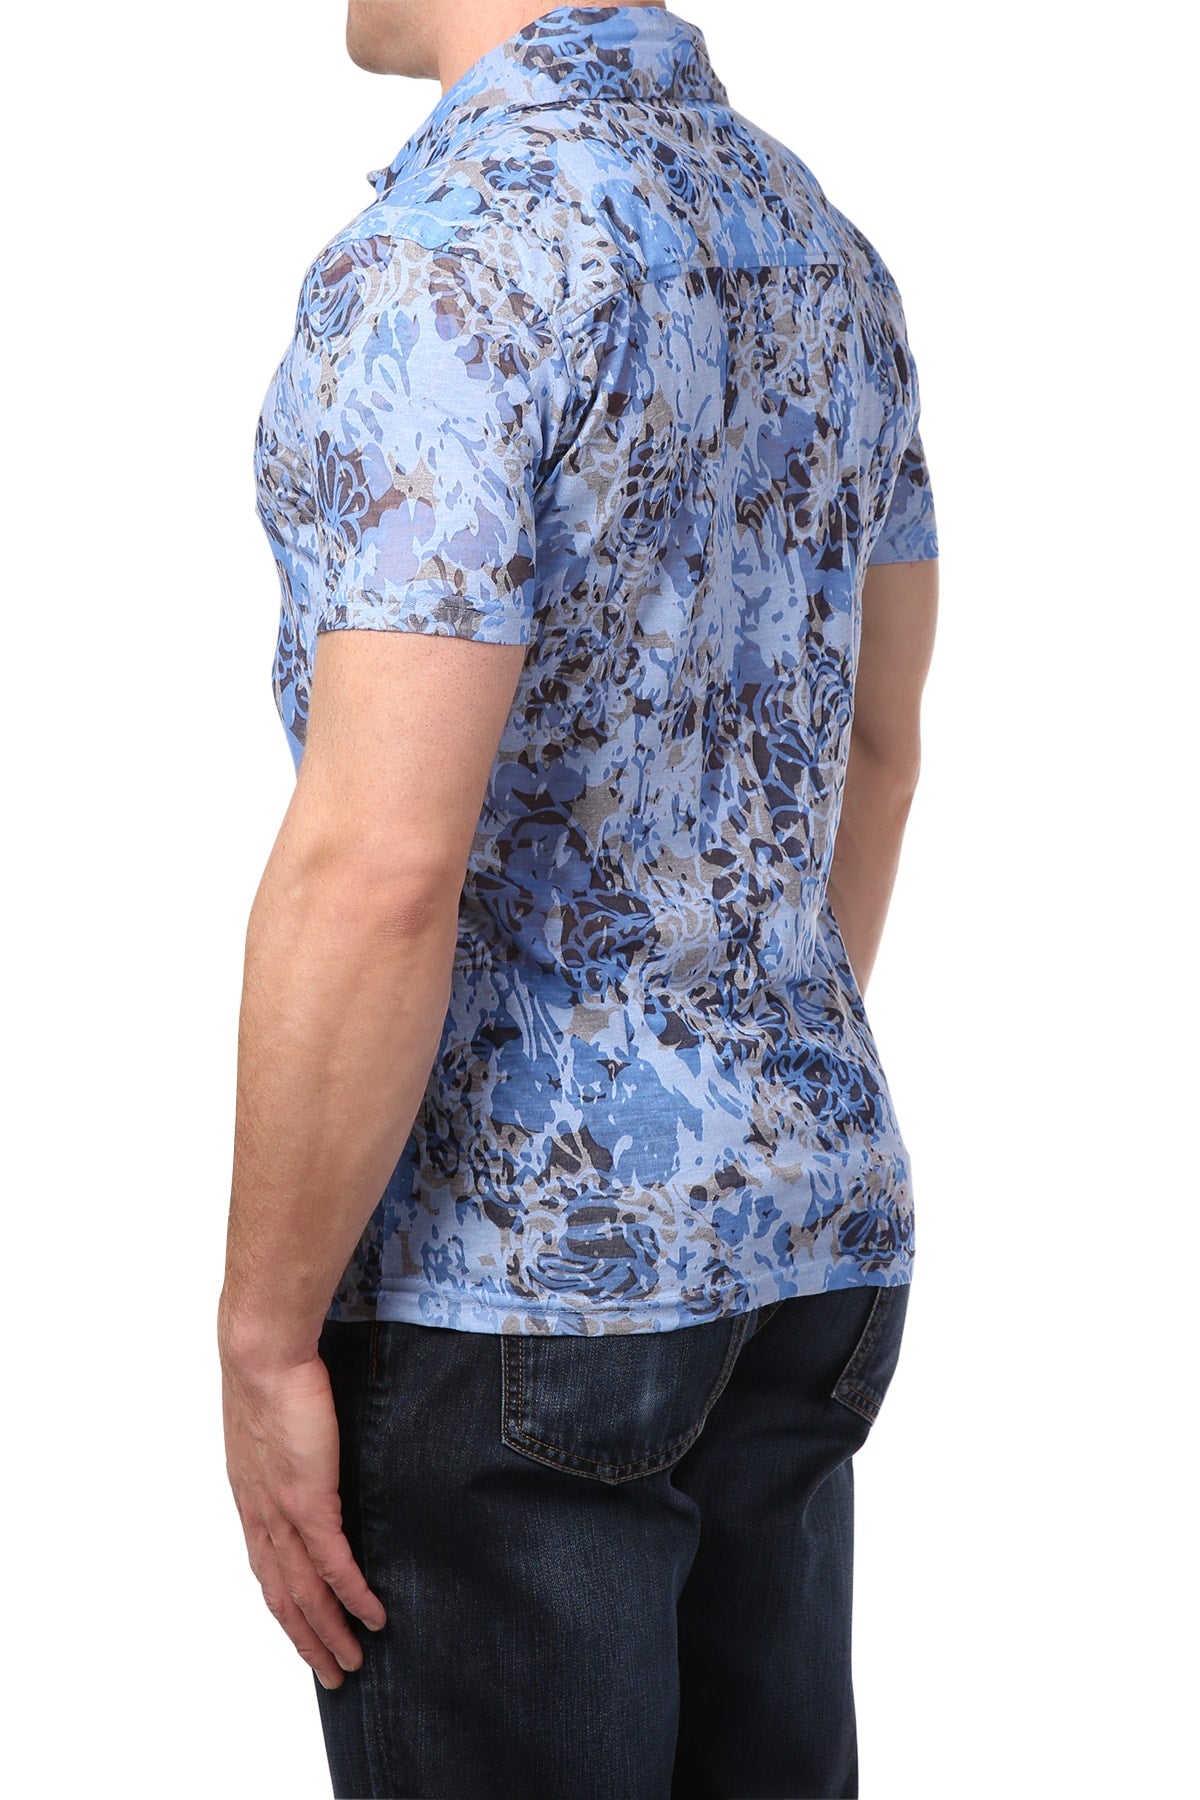 Andres Velasco Blue Tropical Shirt